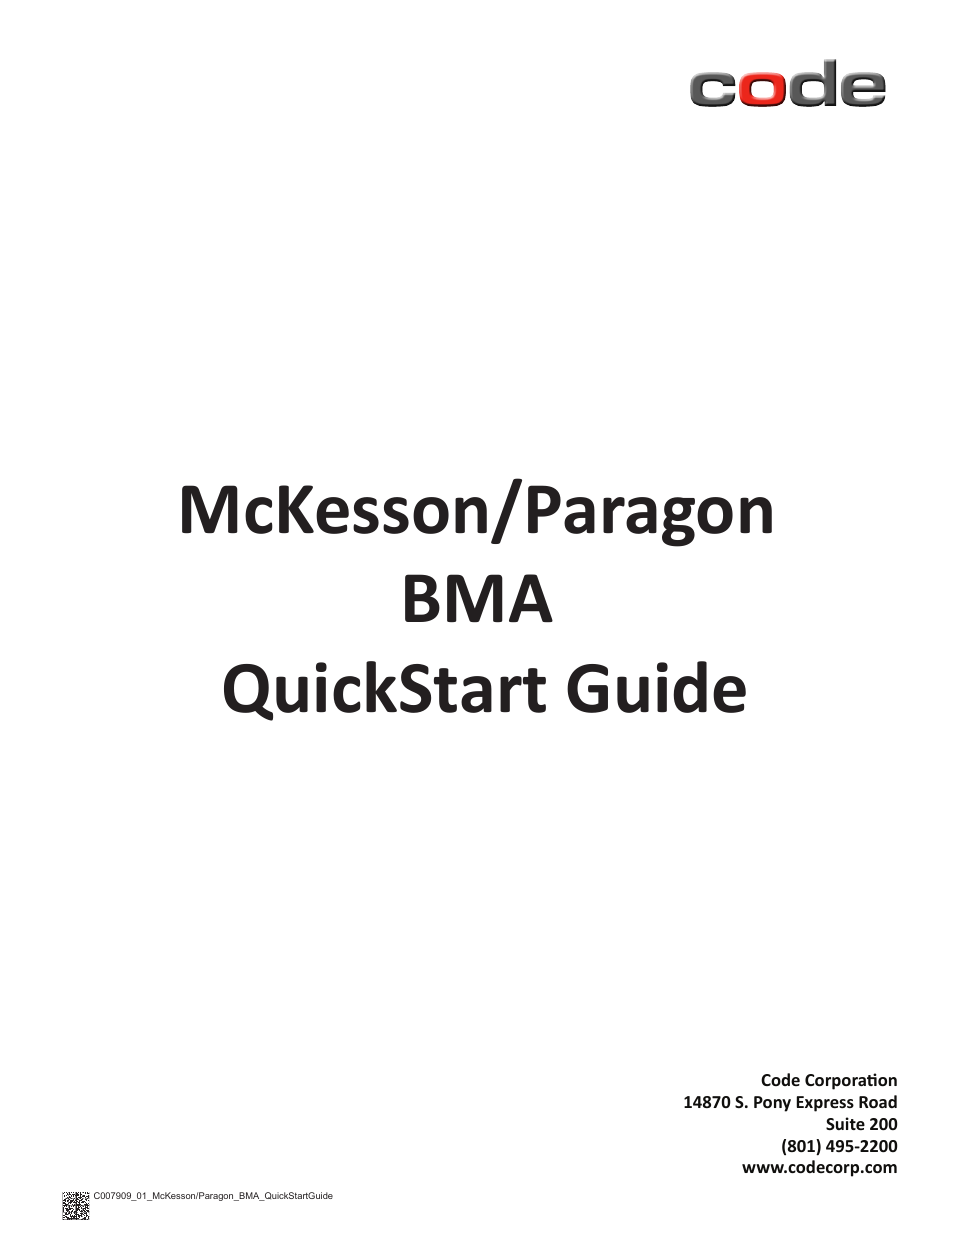 CR2500 McKesson Paragon Quick Start